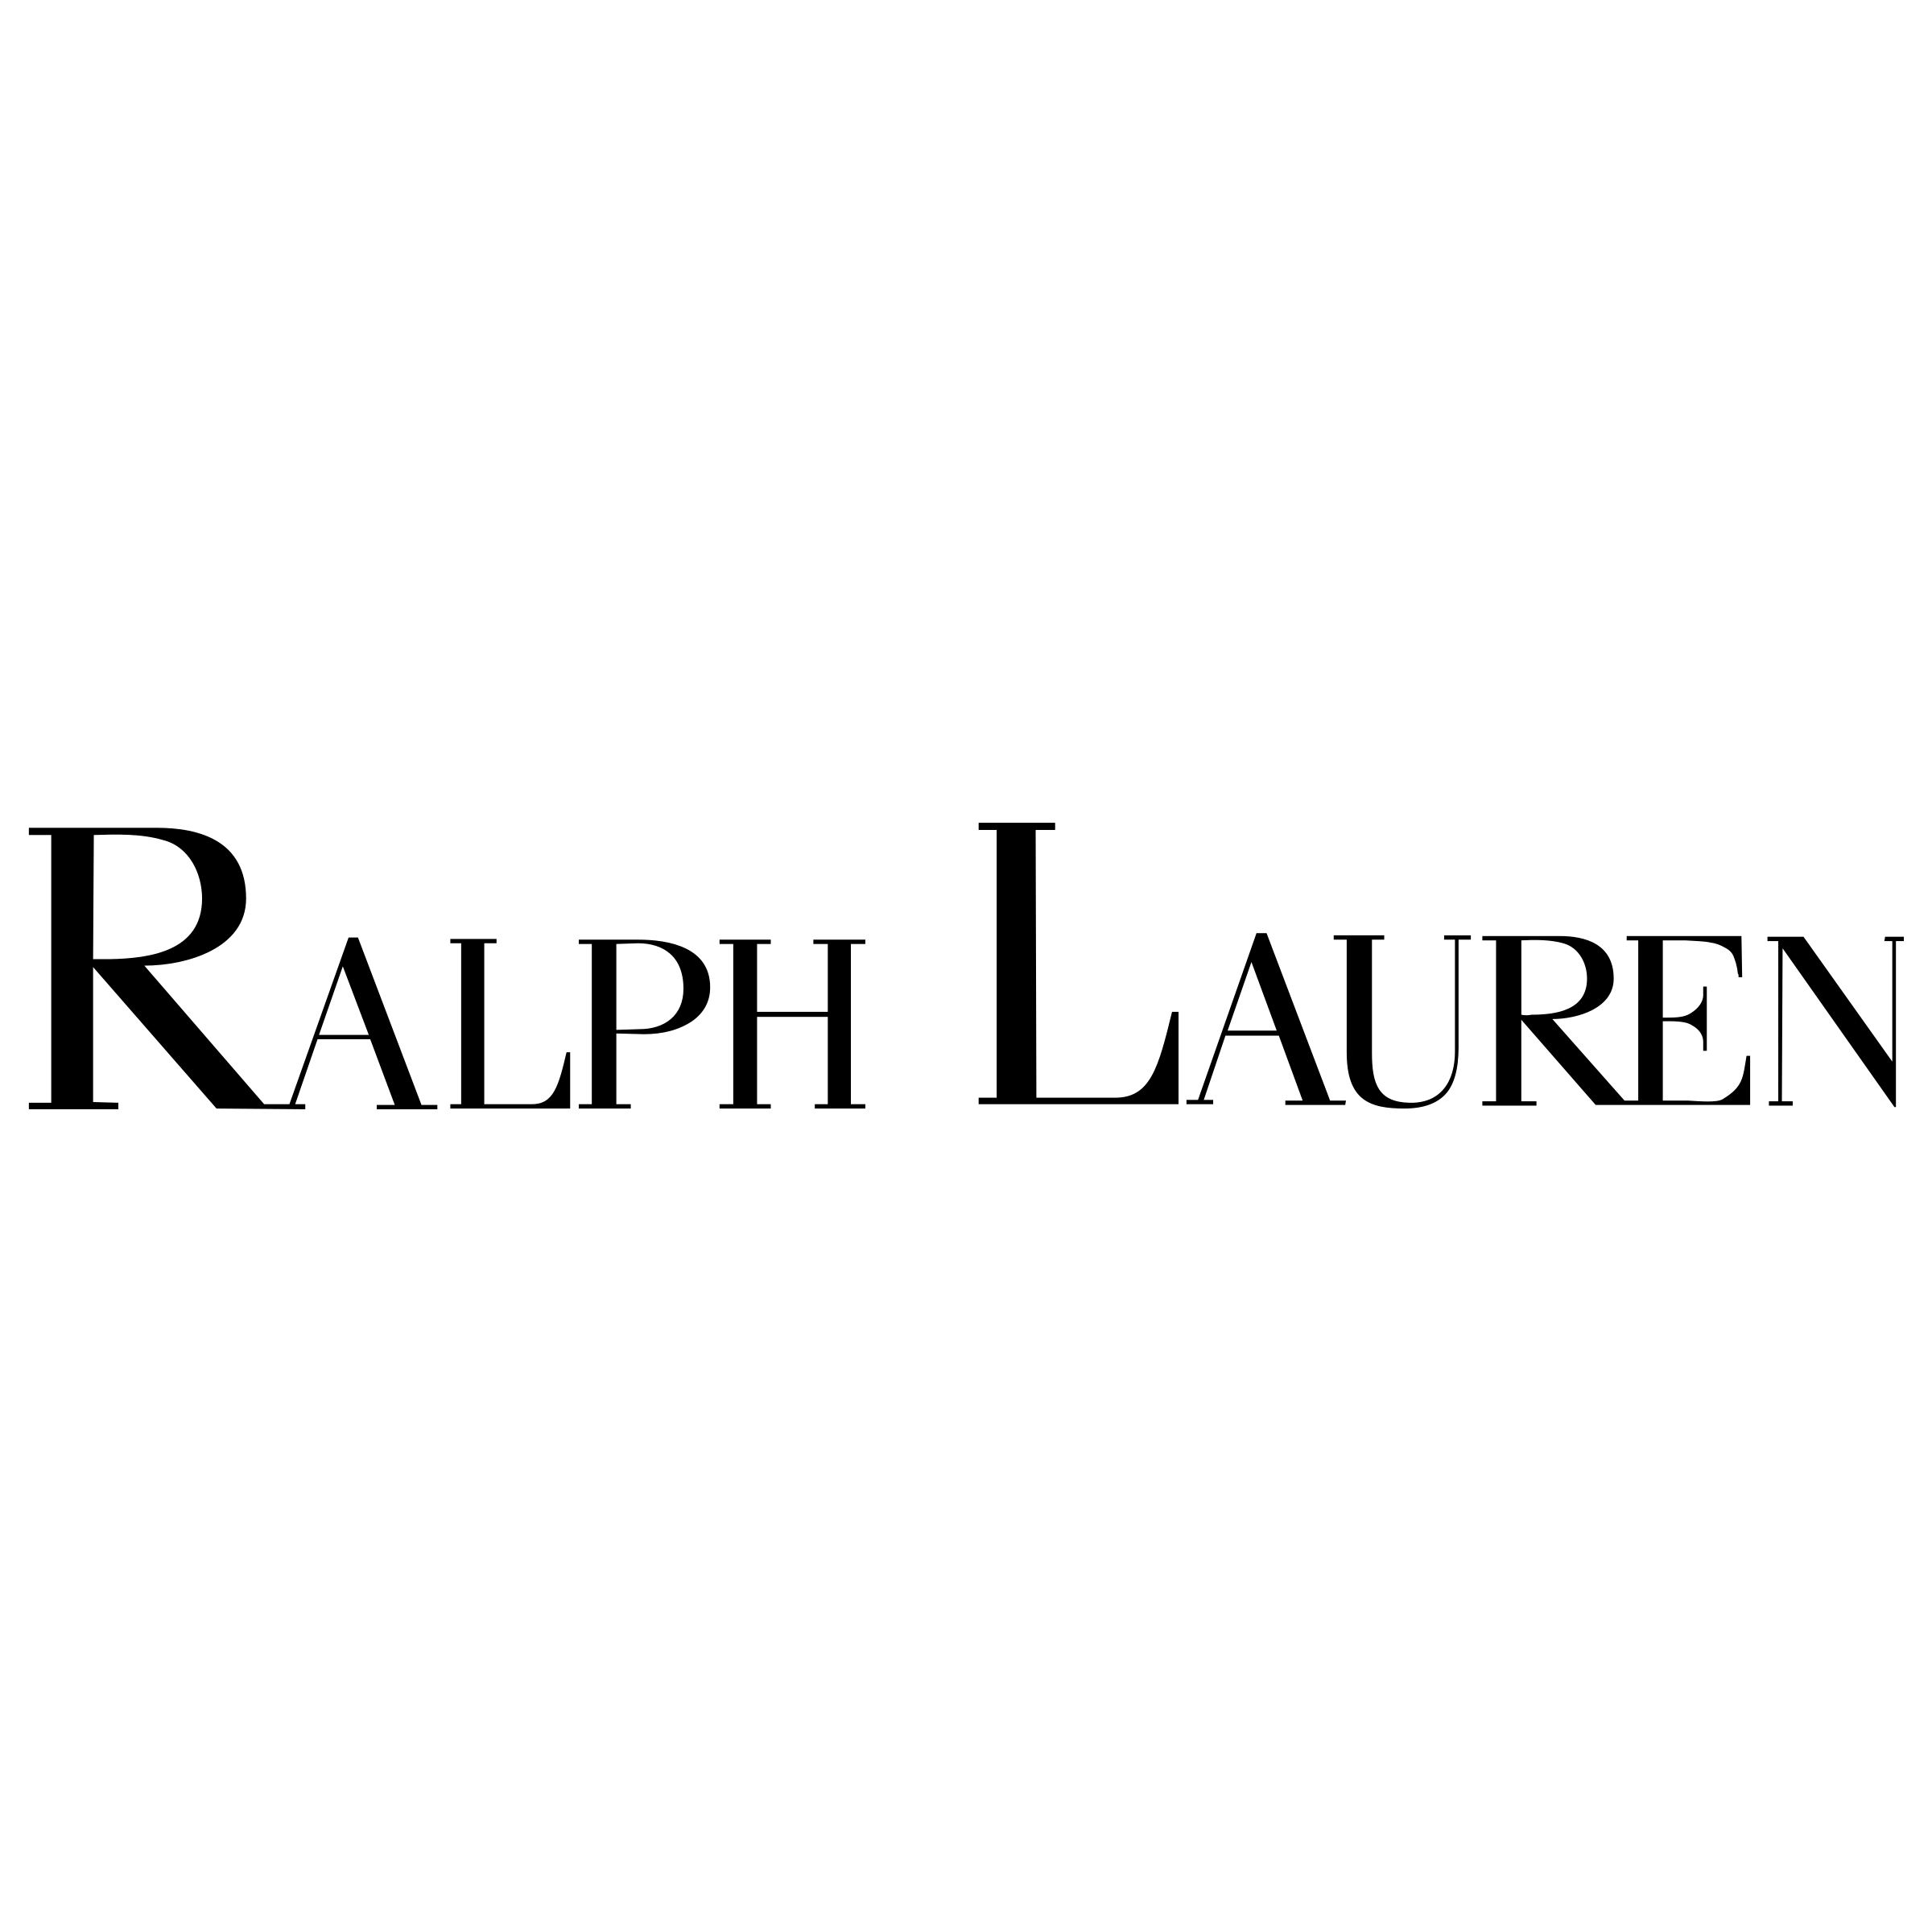 Polo Ralph Lauren Logo Transparent Image